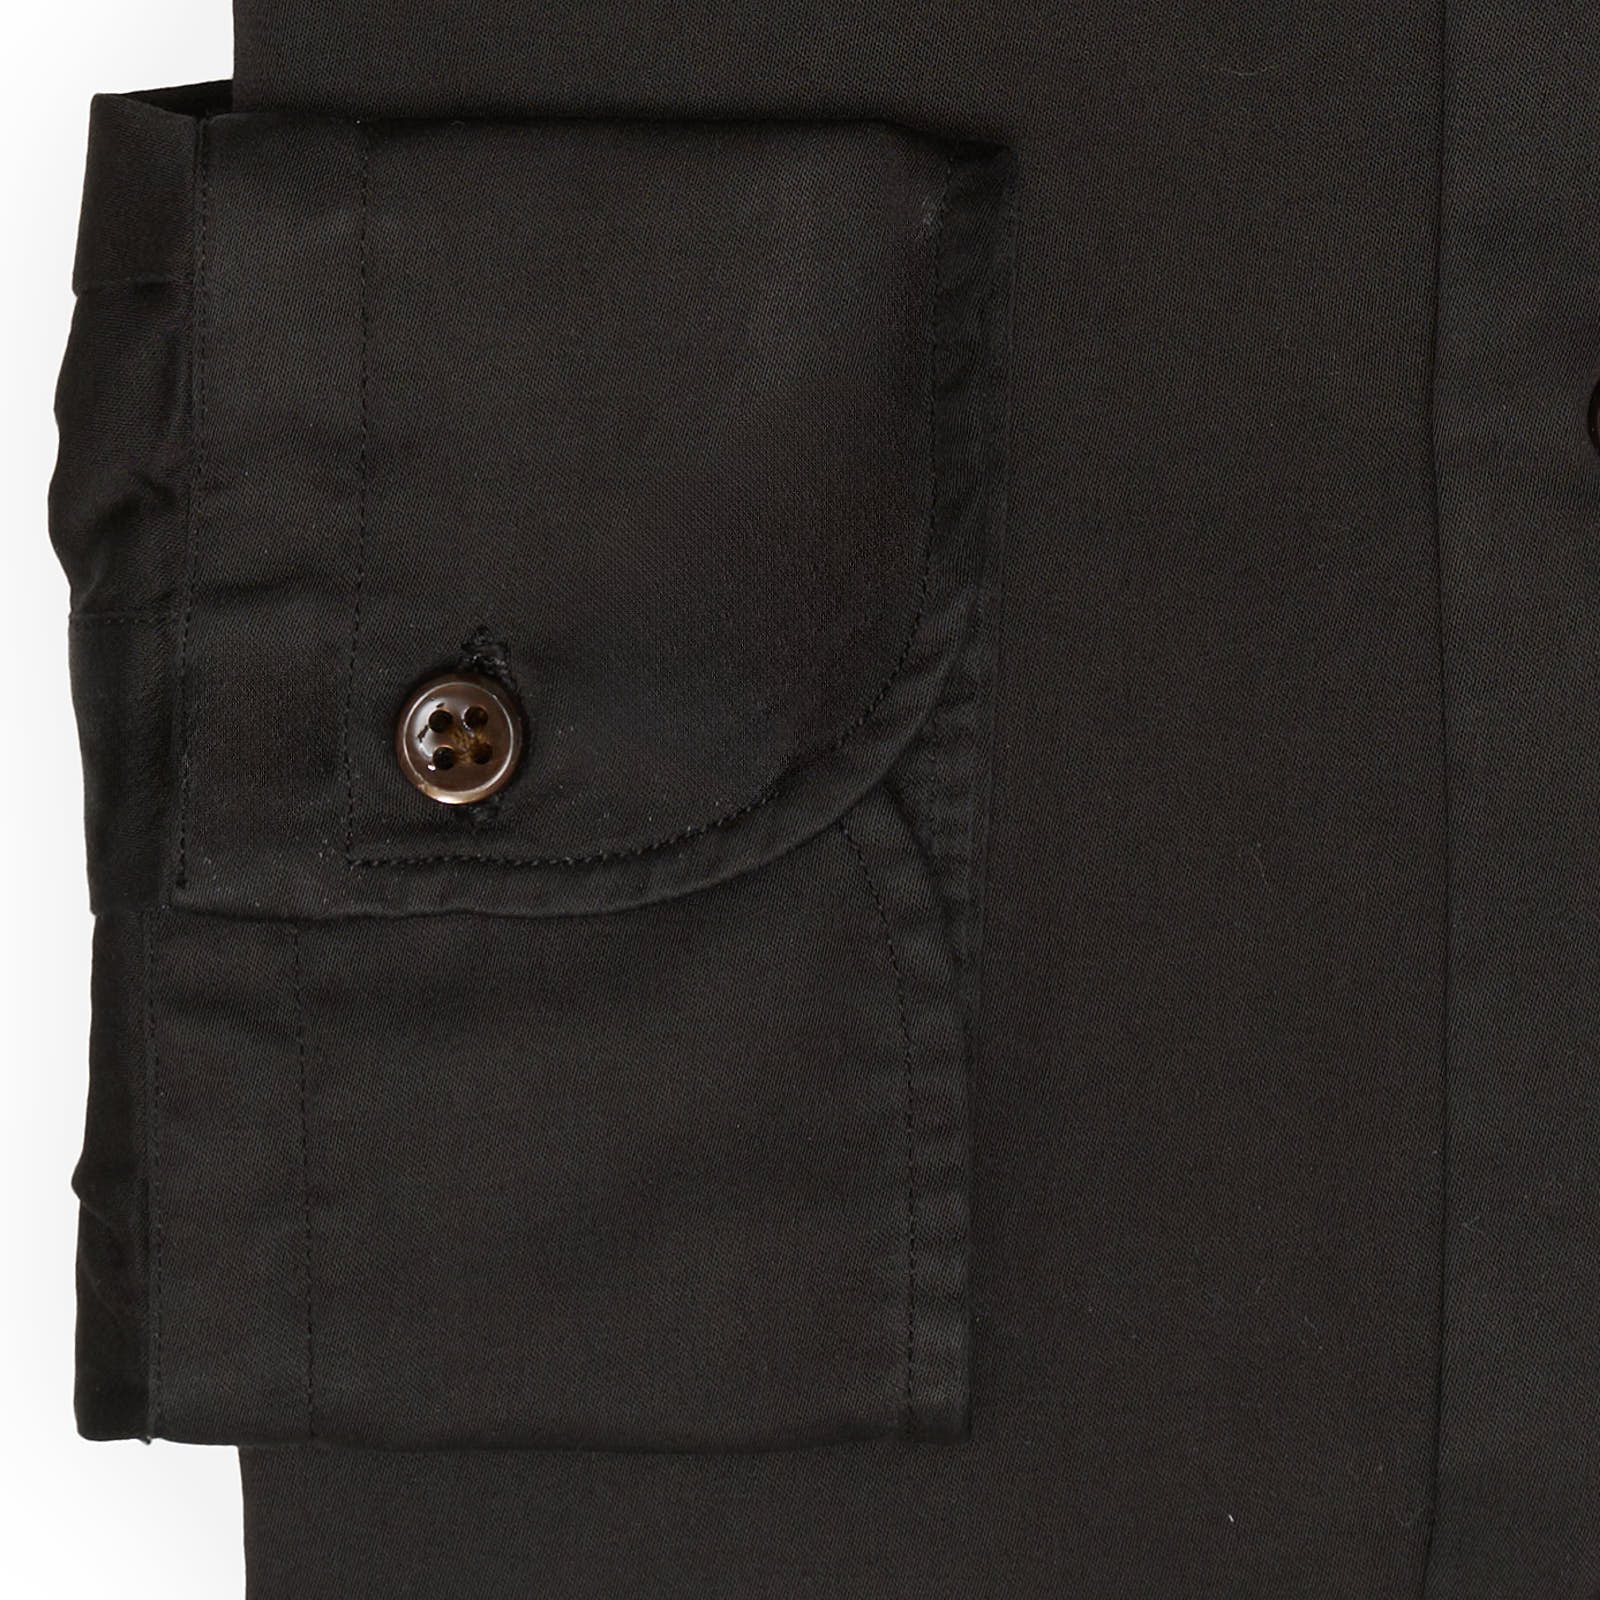 VINCENZO DI RUGGIERO Handmade Black Cotton Dress Shirt EU 40 NEW US 15.75